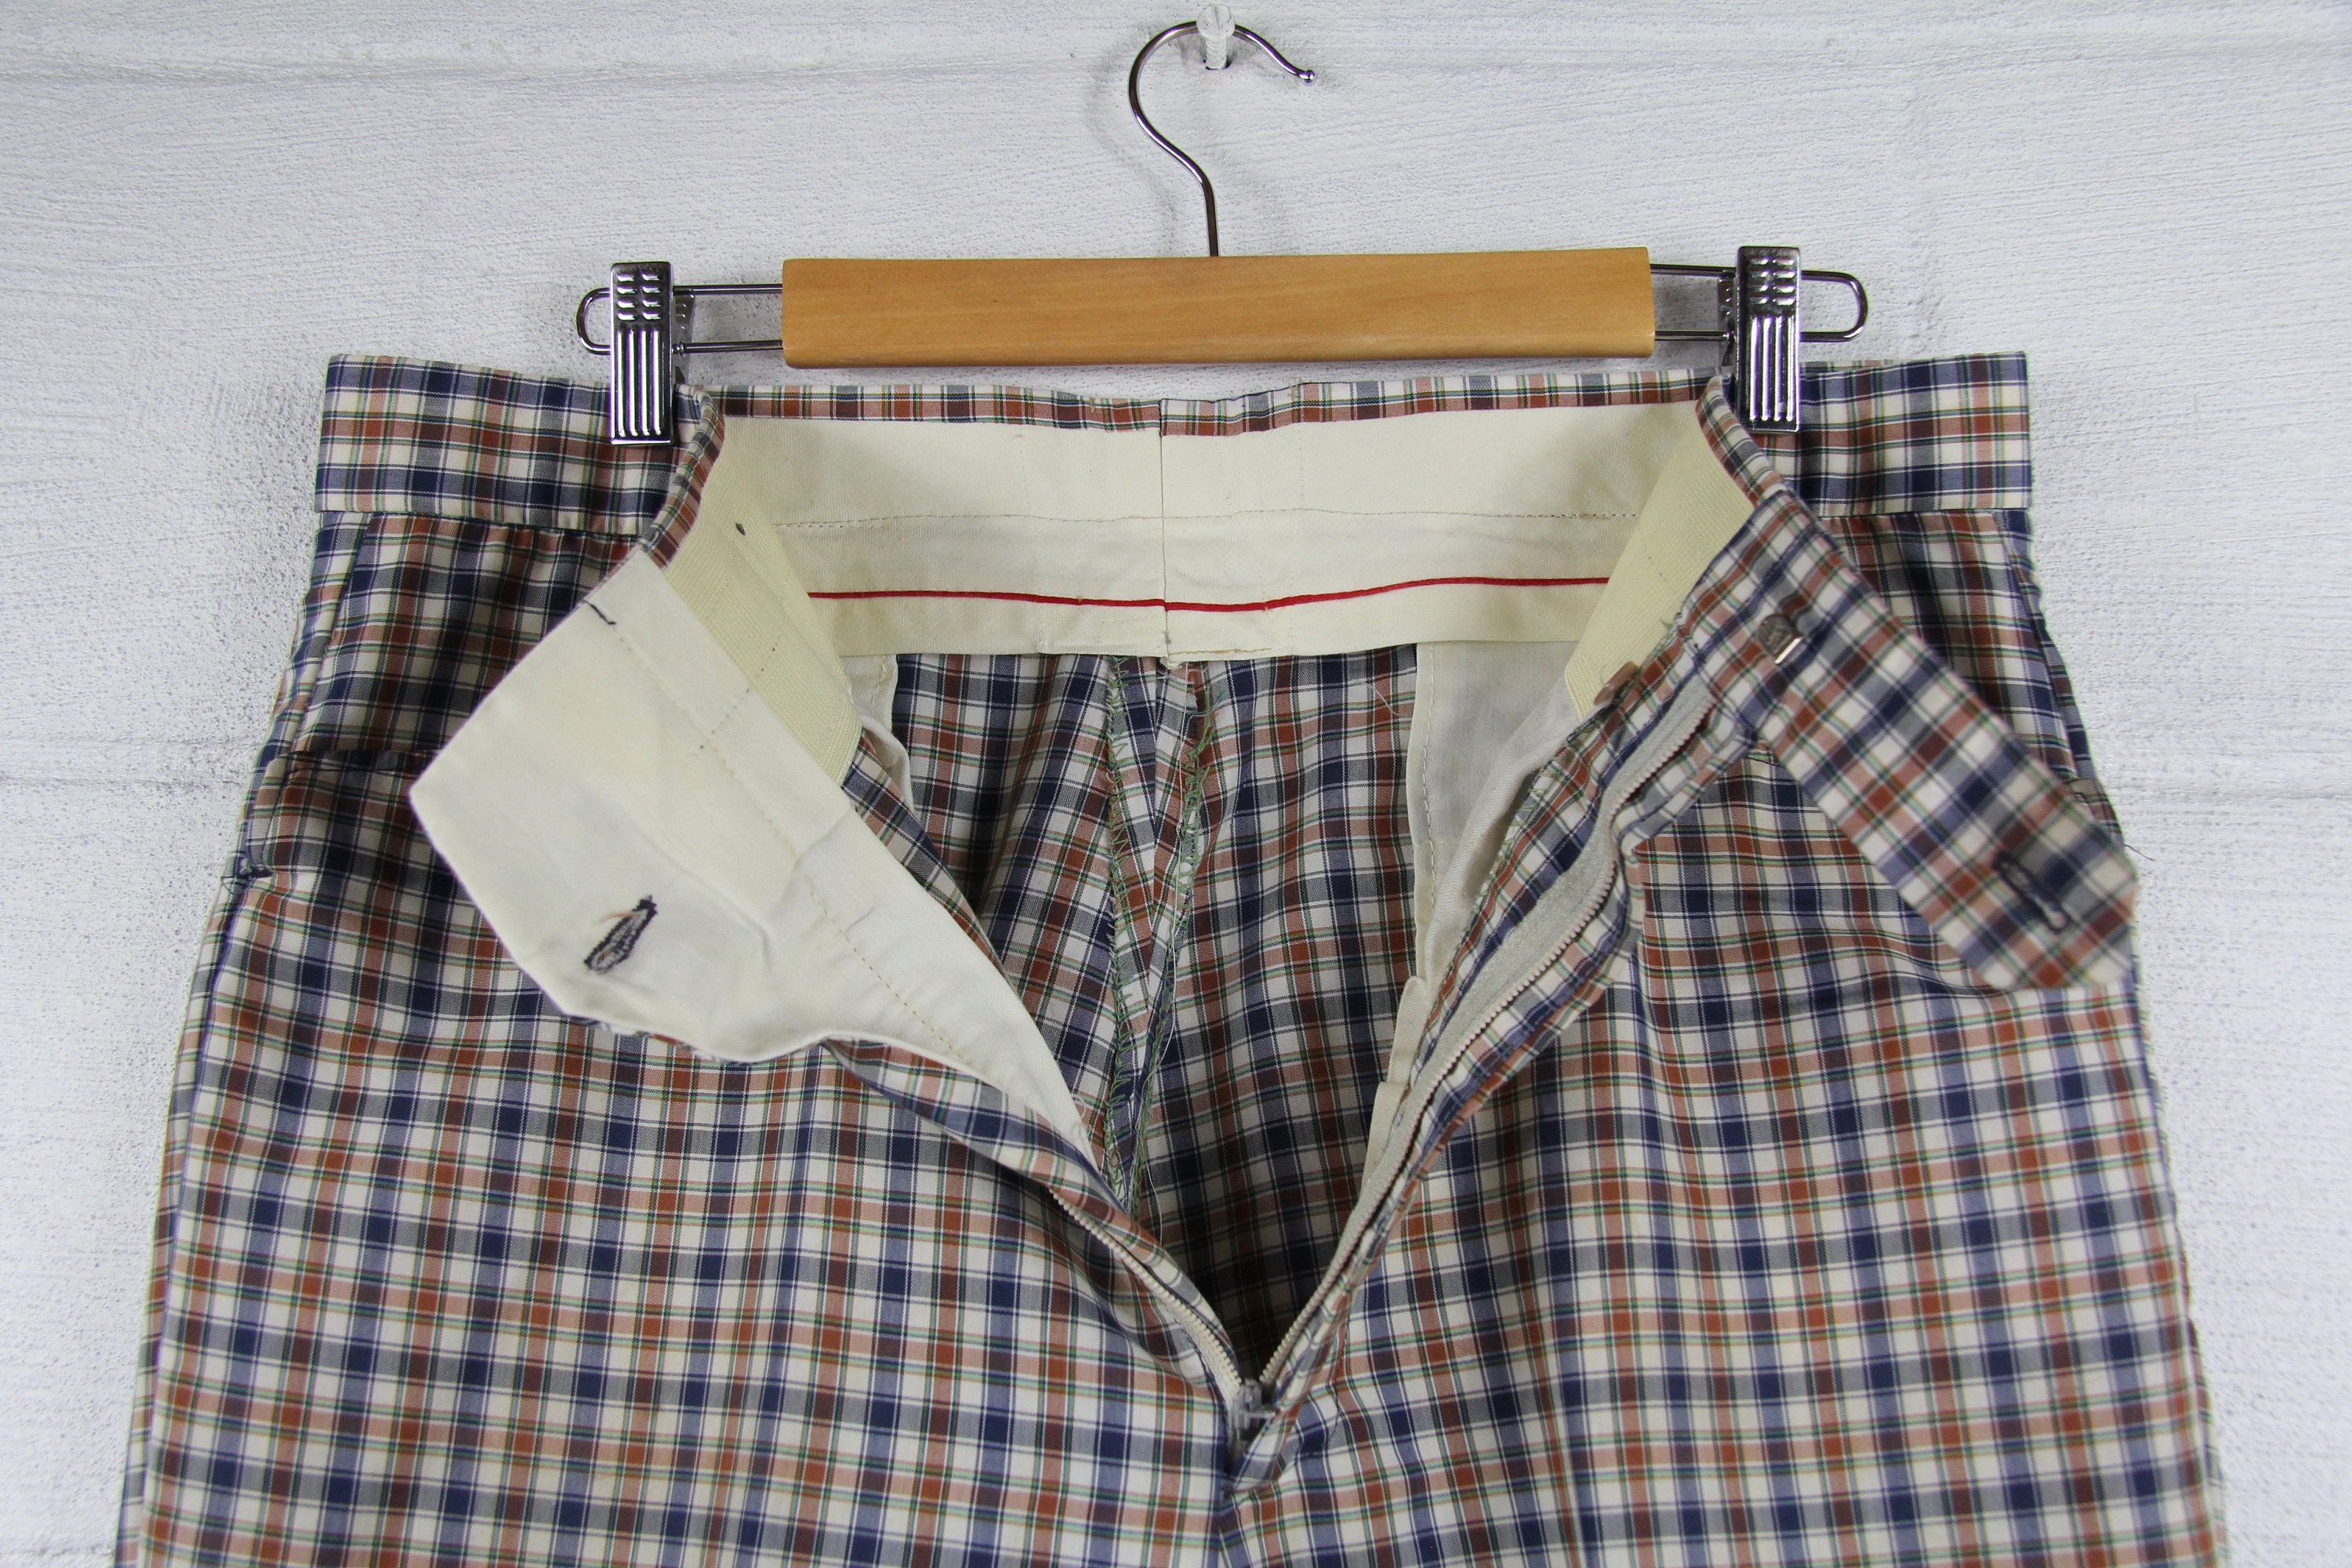 70's Men's Golf Pants Plaid Divoys Blue Brown Green Cream Slacks Size 35